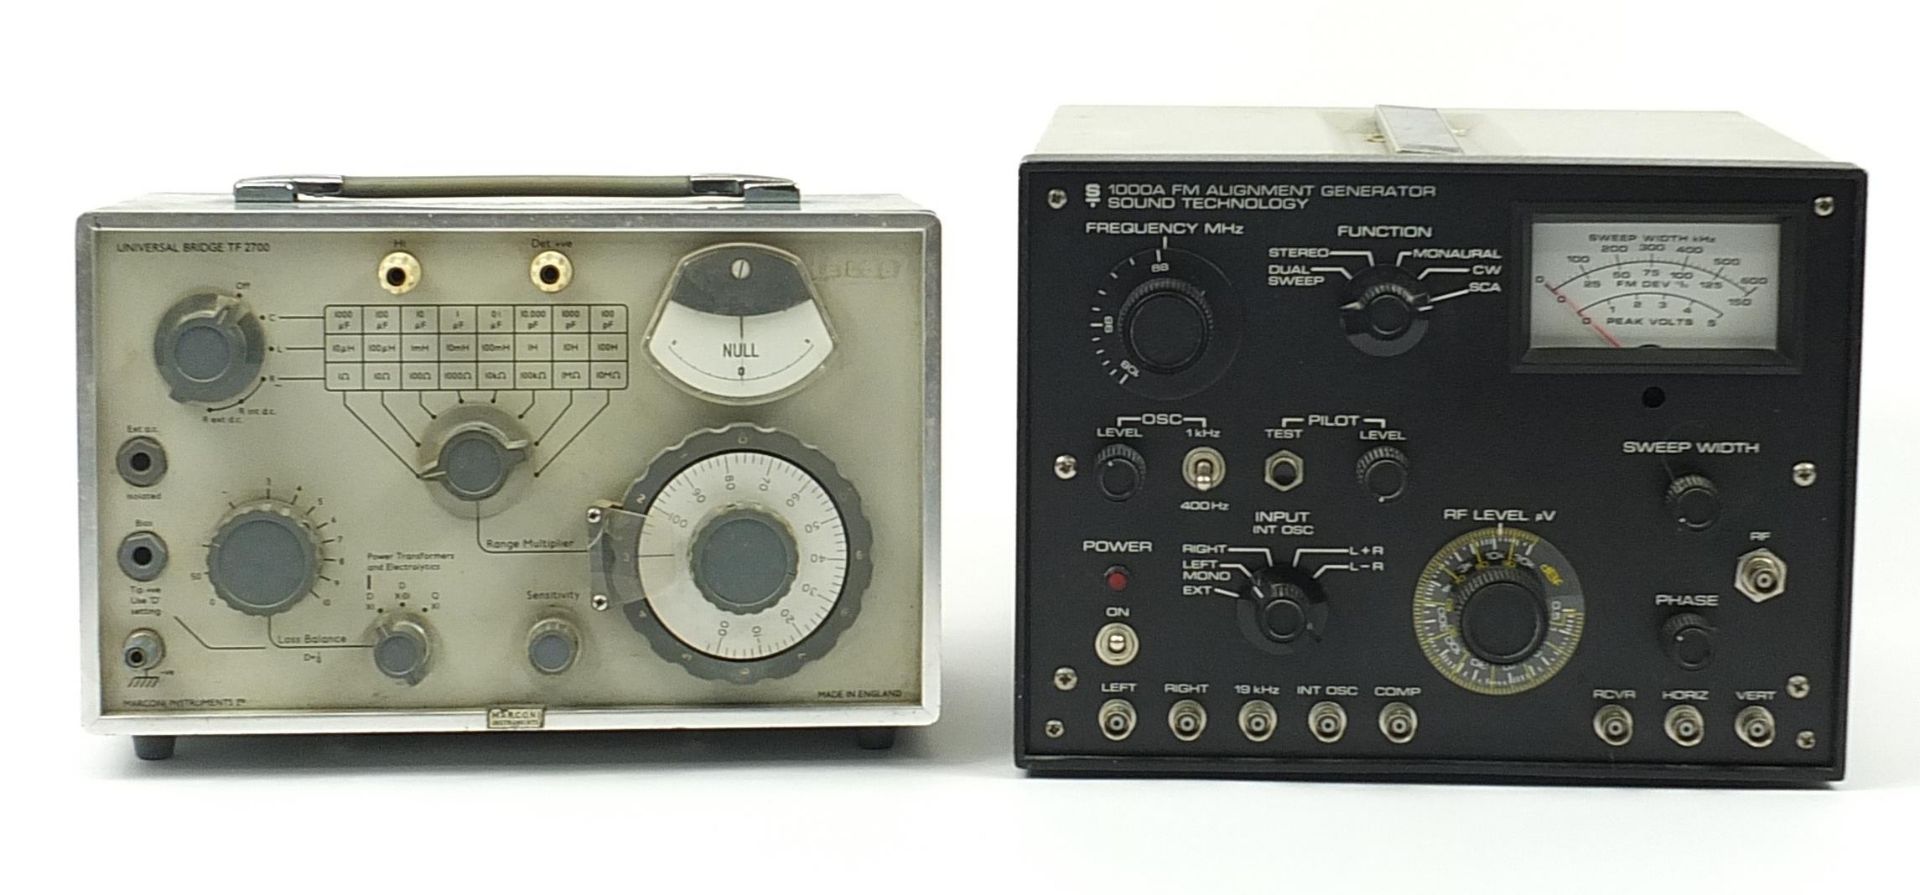 Sound Technology 1000A FM alignment generator and Marconi Instruments universal bridge TF2700